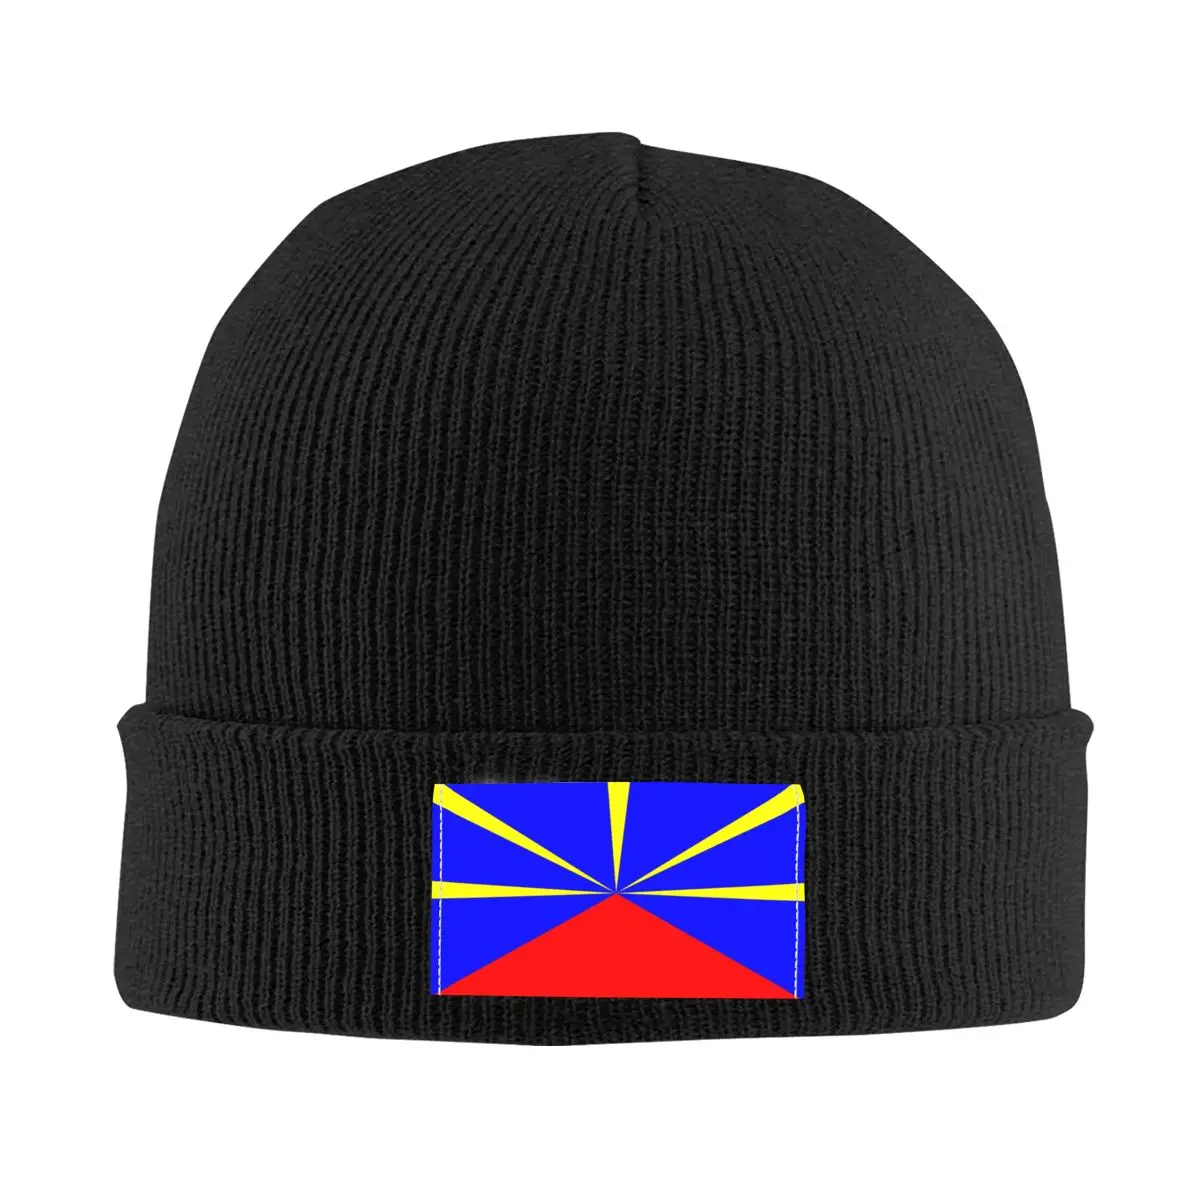 974 Reunion Island Flag Bonnet Hats Fashion Knitting Hat For Women Men Autumn Winter Warm Reunionese Proud Skullies Beanies Caps